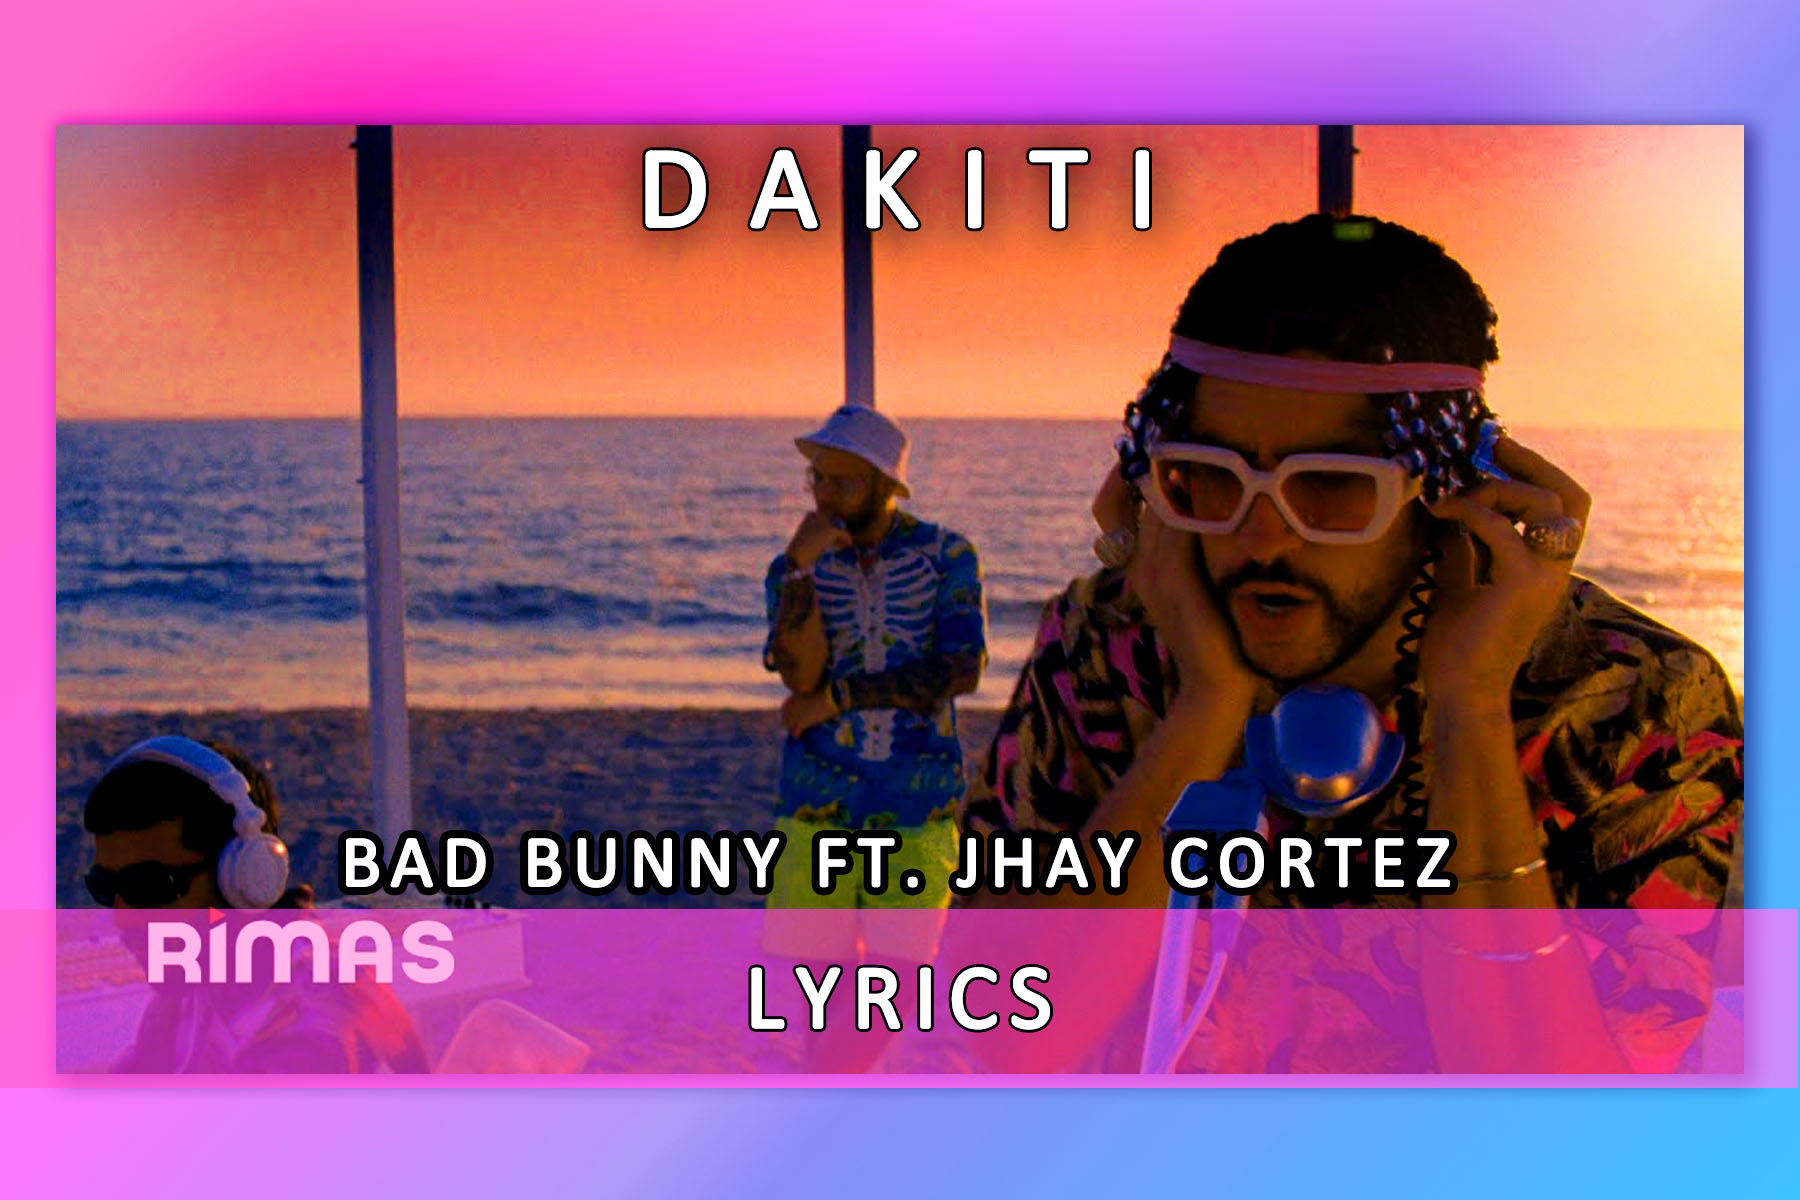 Bad bunny am lyrics